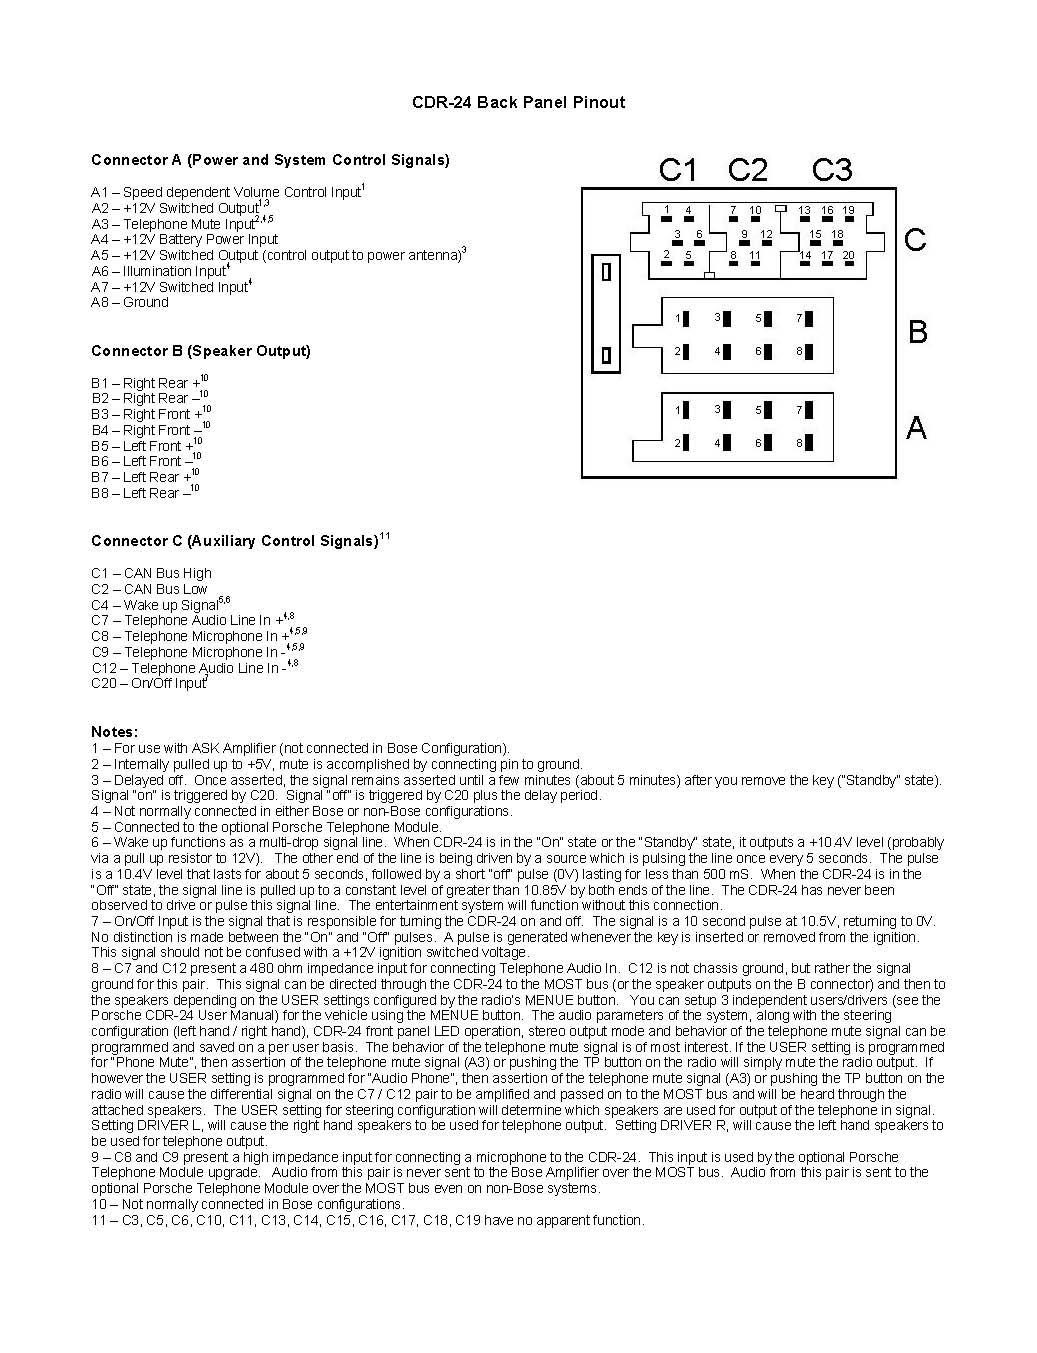 Installation d'un Autoradio Double Din GPS Universel AS8101 [Dispo ICI !] - Page 2 Cdr_2410